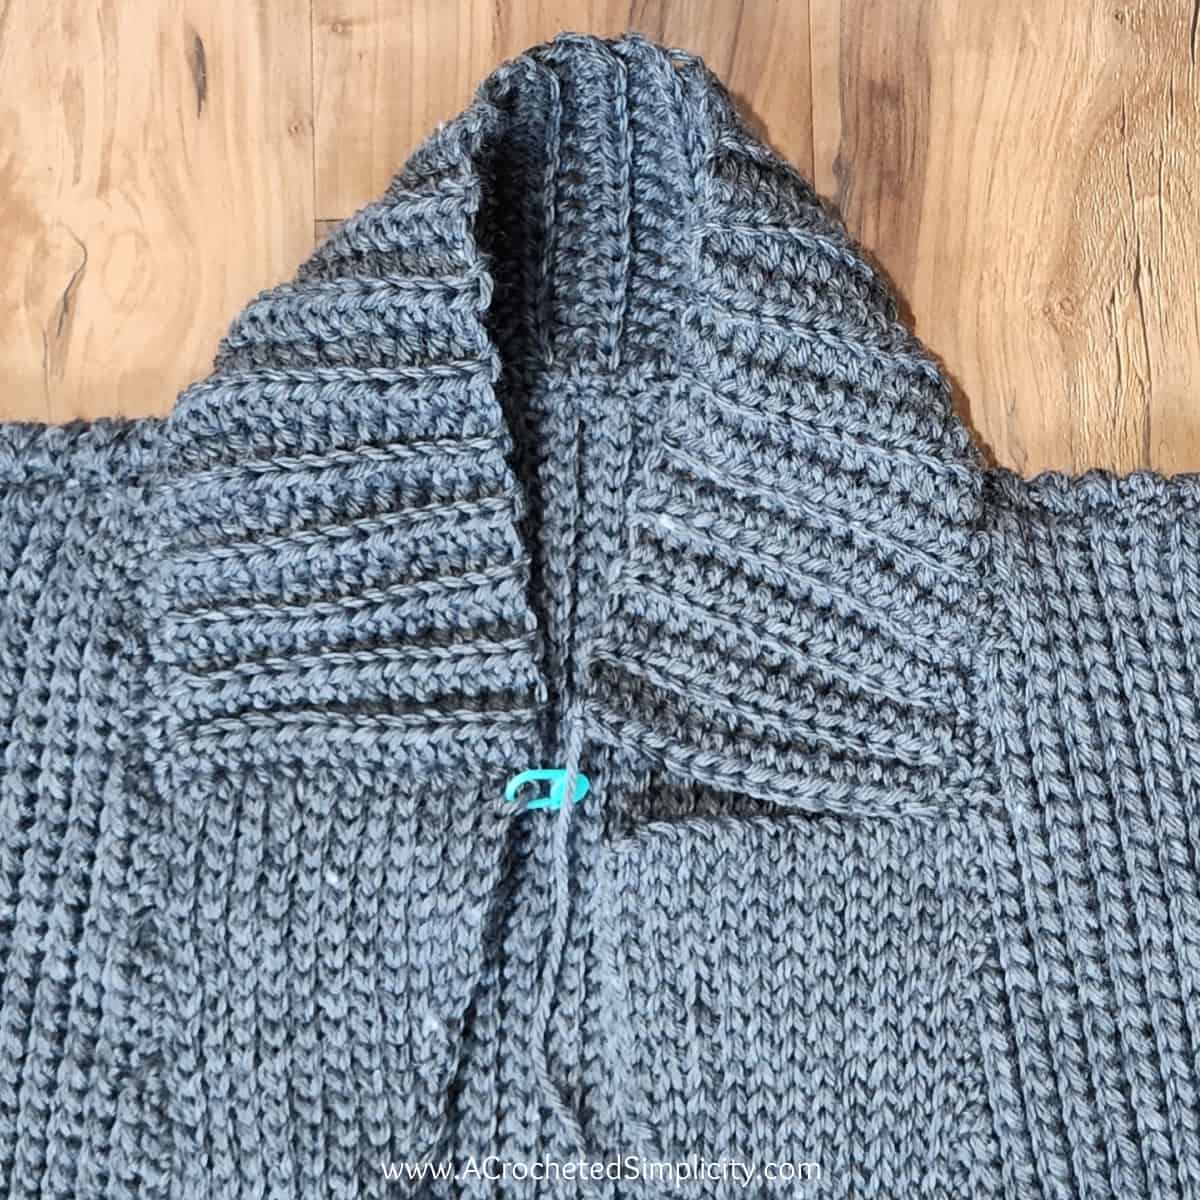 Crochet shawl collar construction tutorial